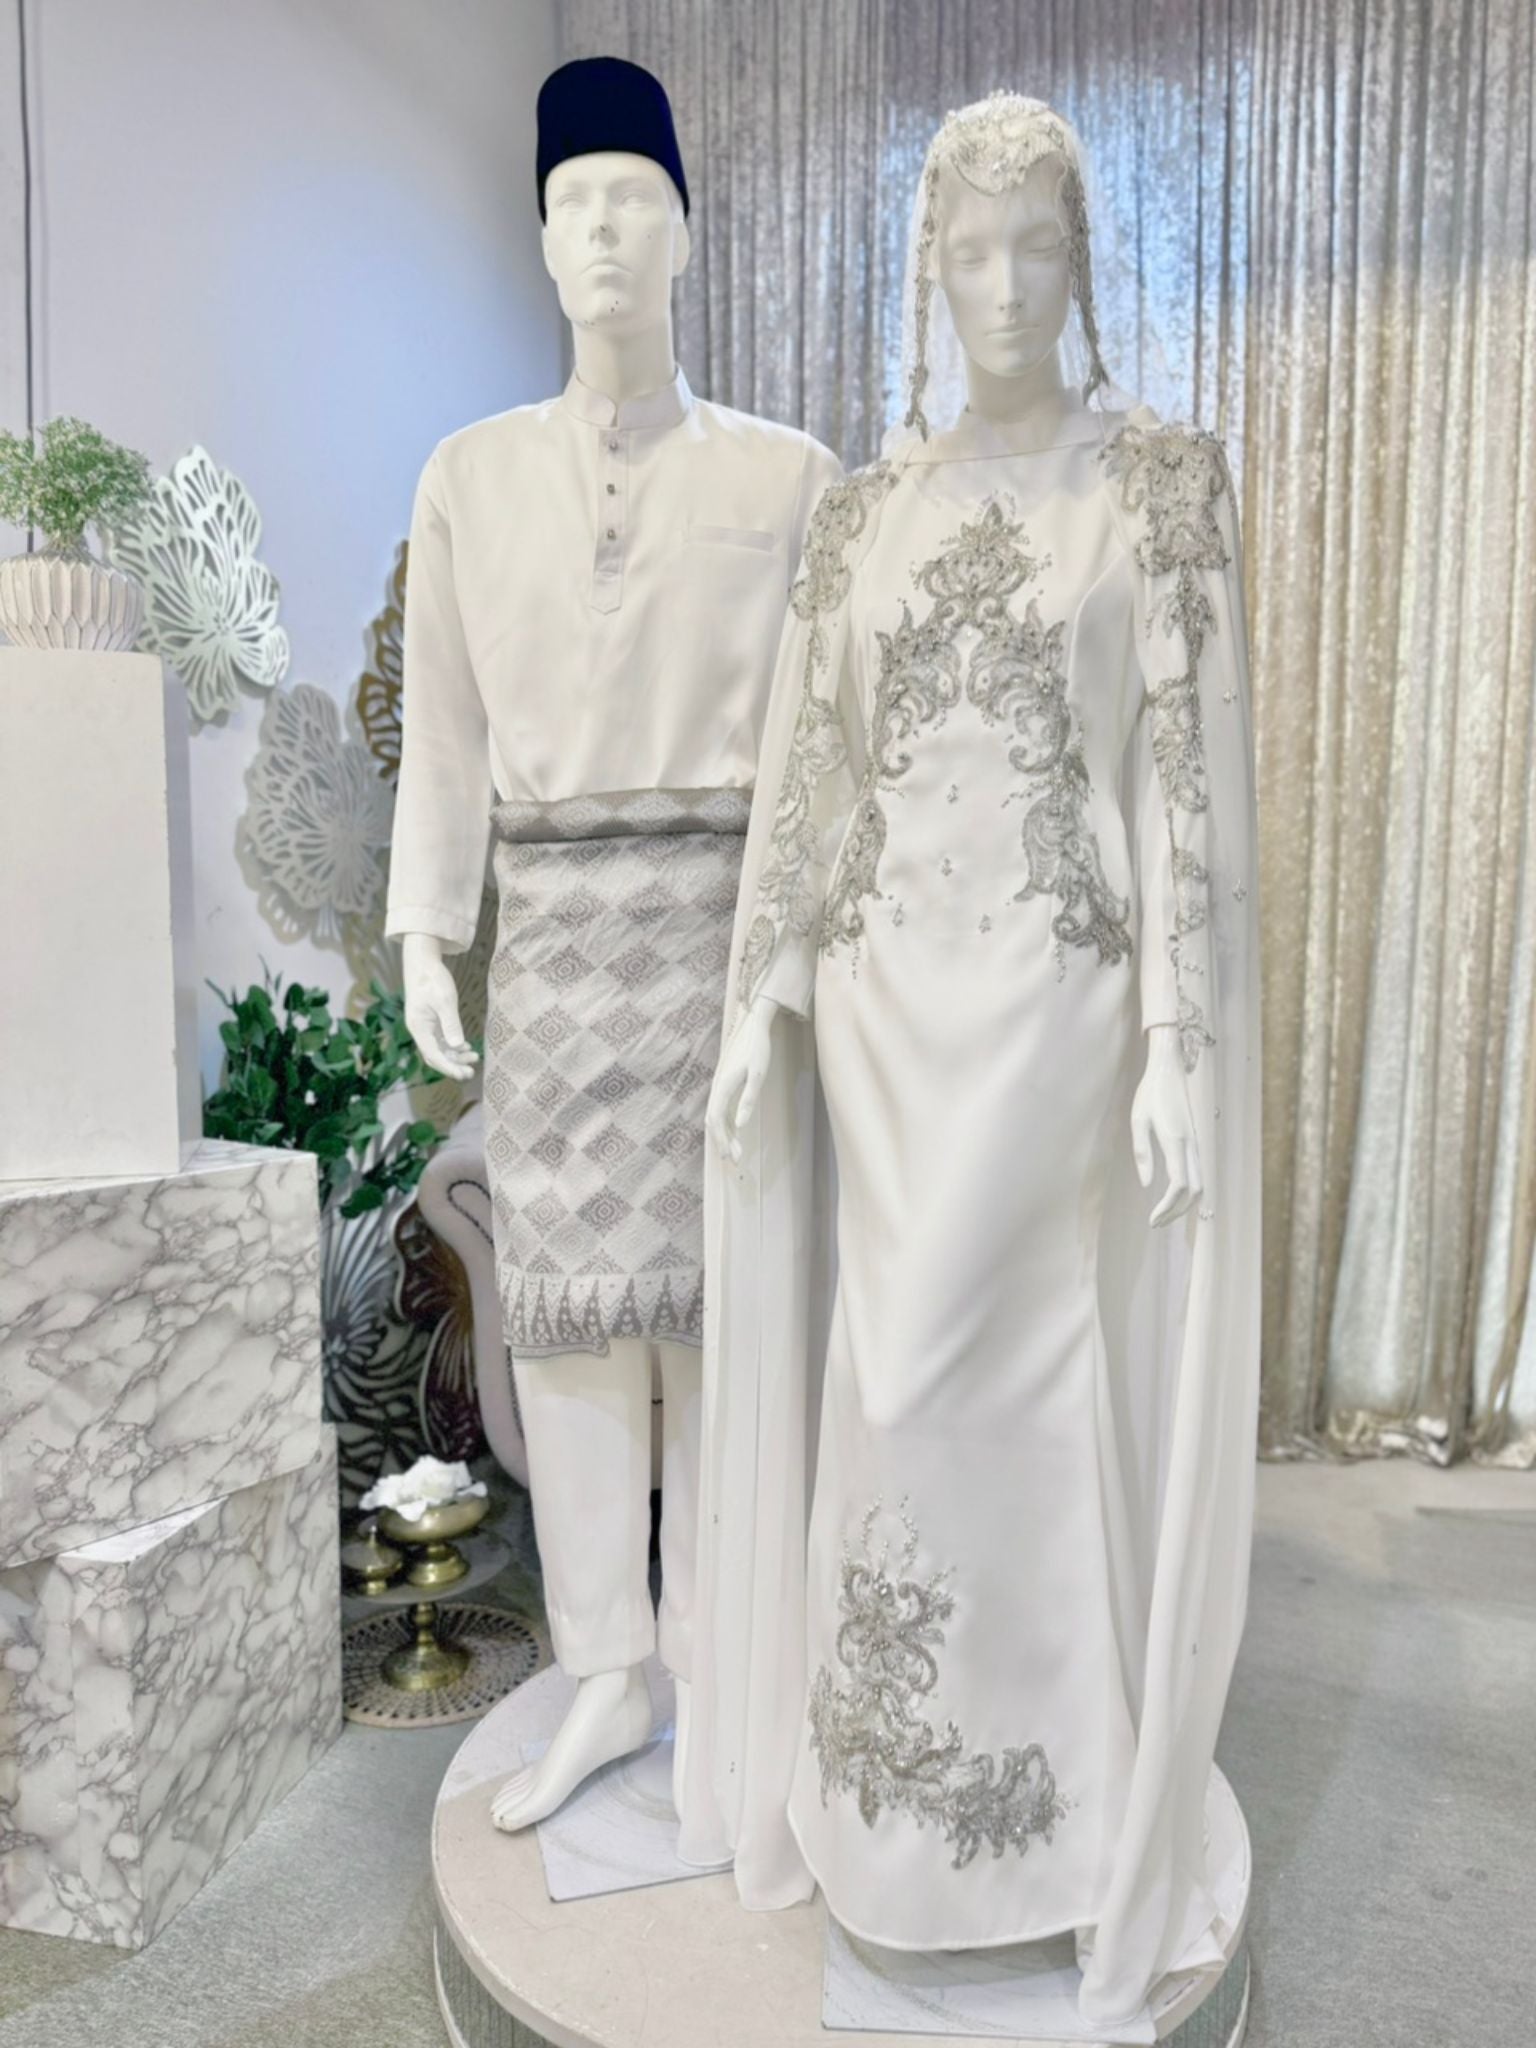 RAUDHAH - Baju Nikah Off White Double Face Dress with Detachable Cape-sewa baju nikah-tempah baju nikah